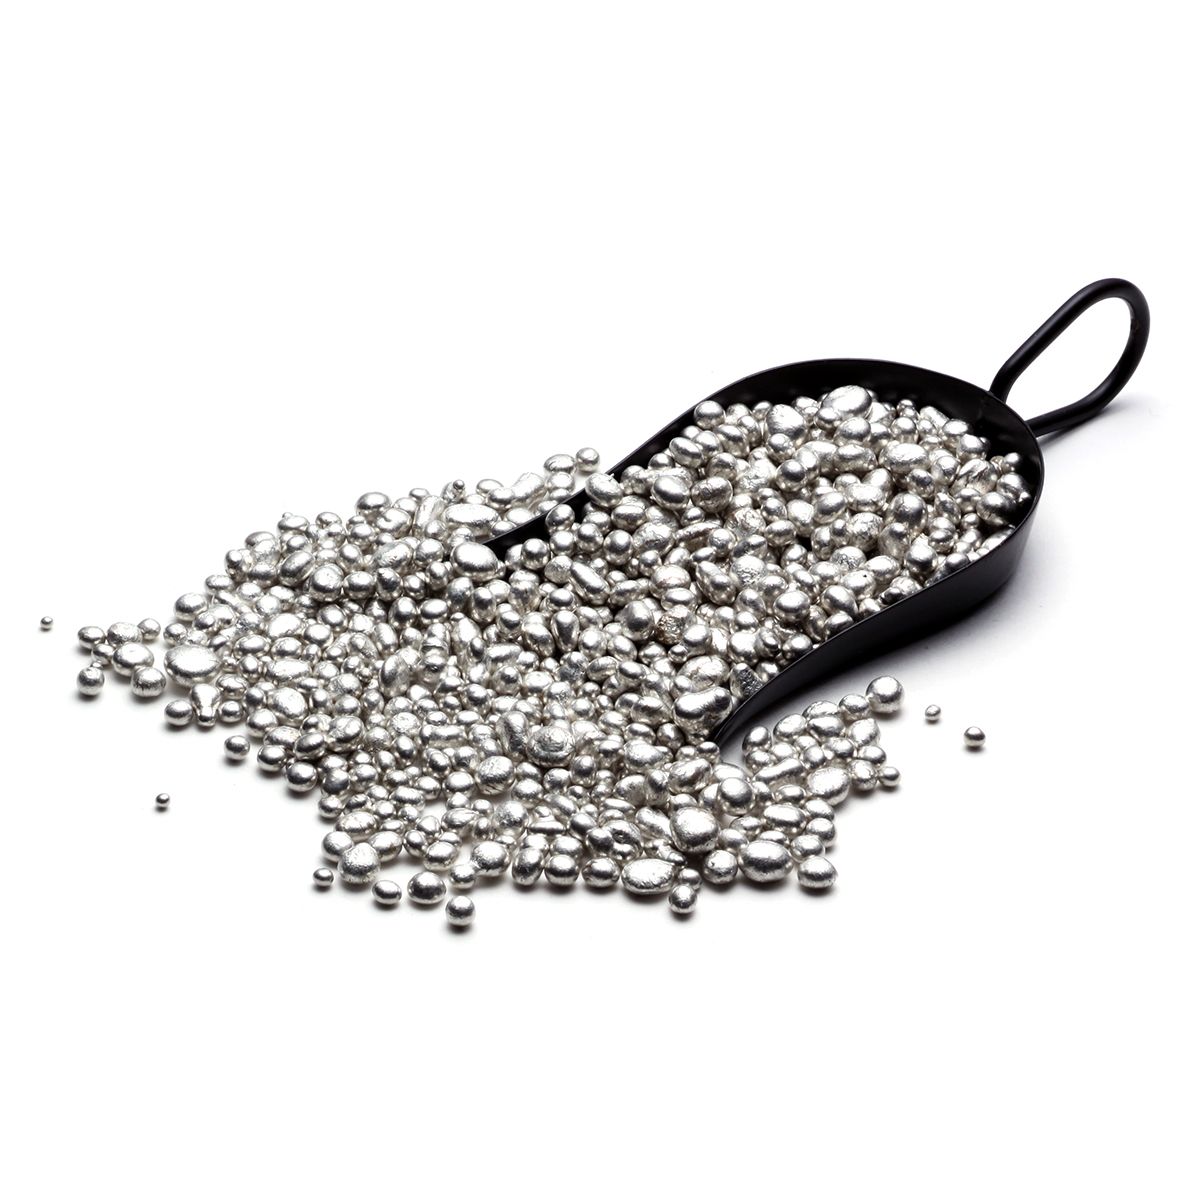 300 Grams Silver 999 Grains